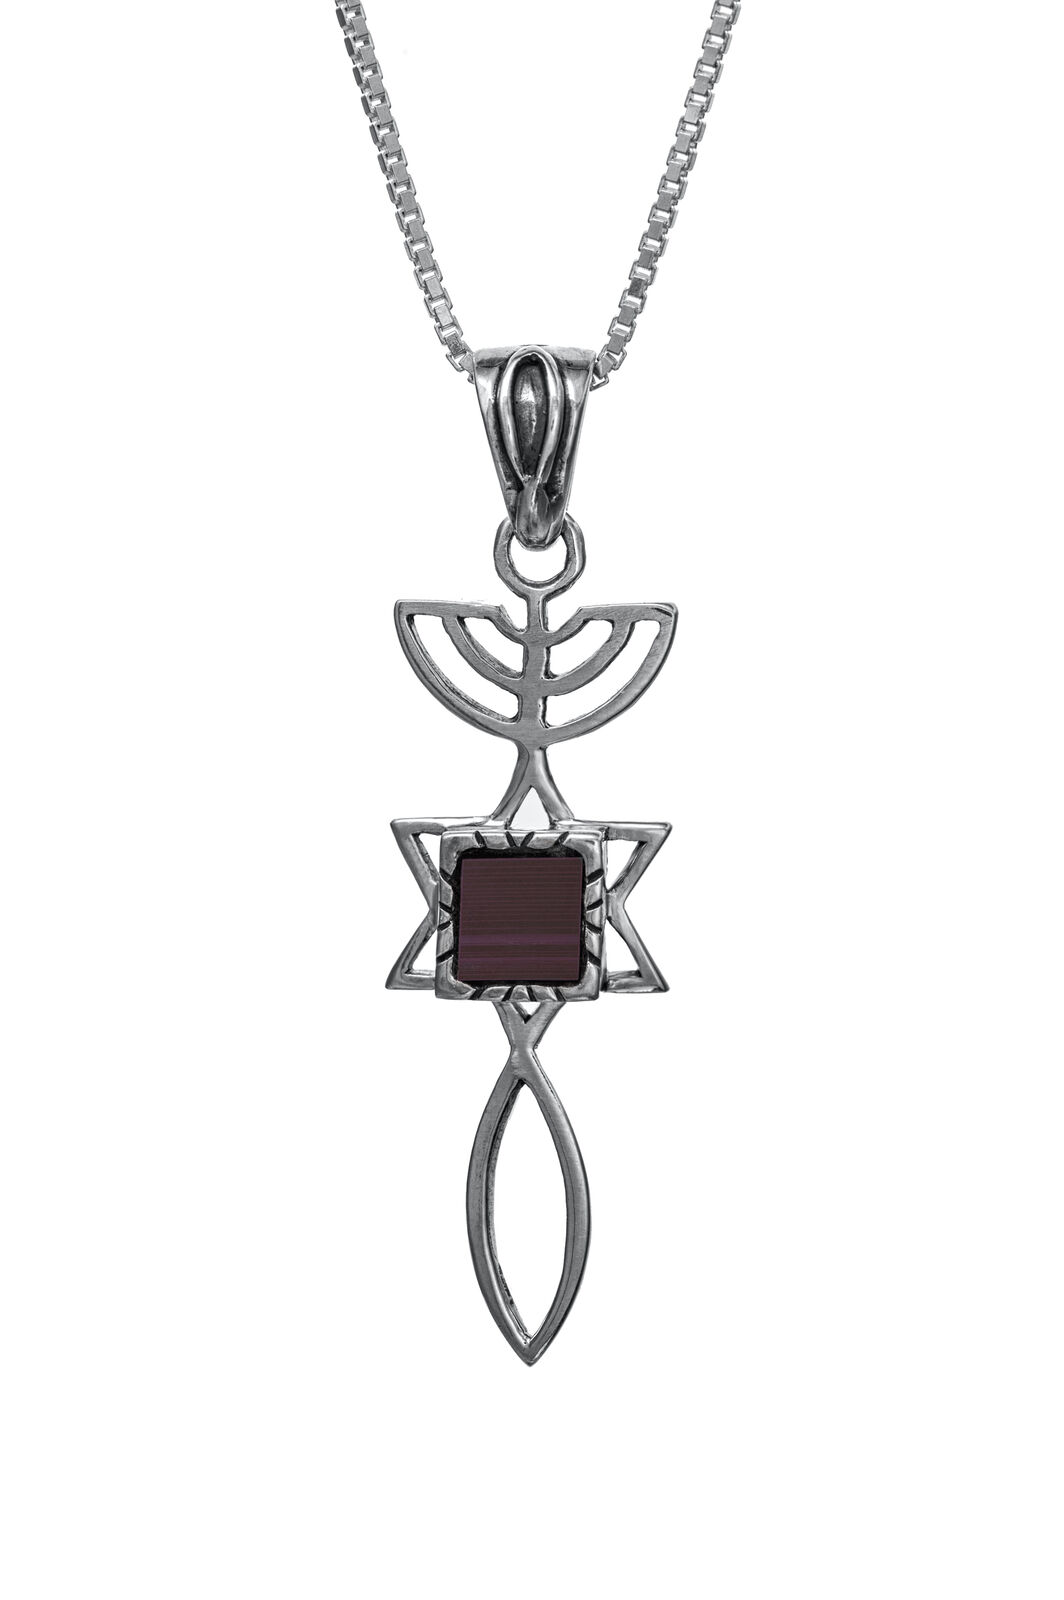 Jerusalem Nano Bible Torah Pendant with Messianic Symbol Necklace Silver 925